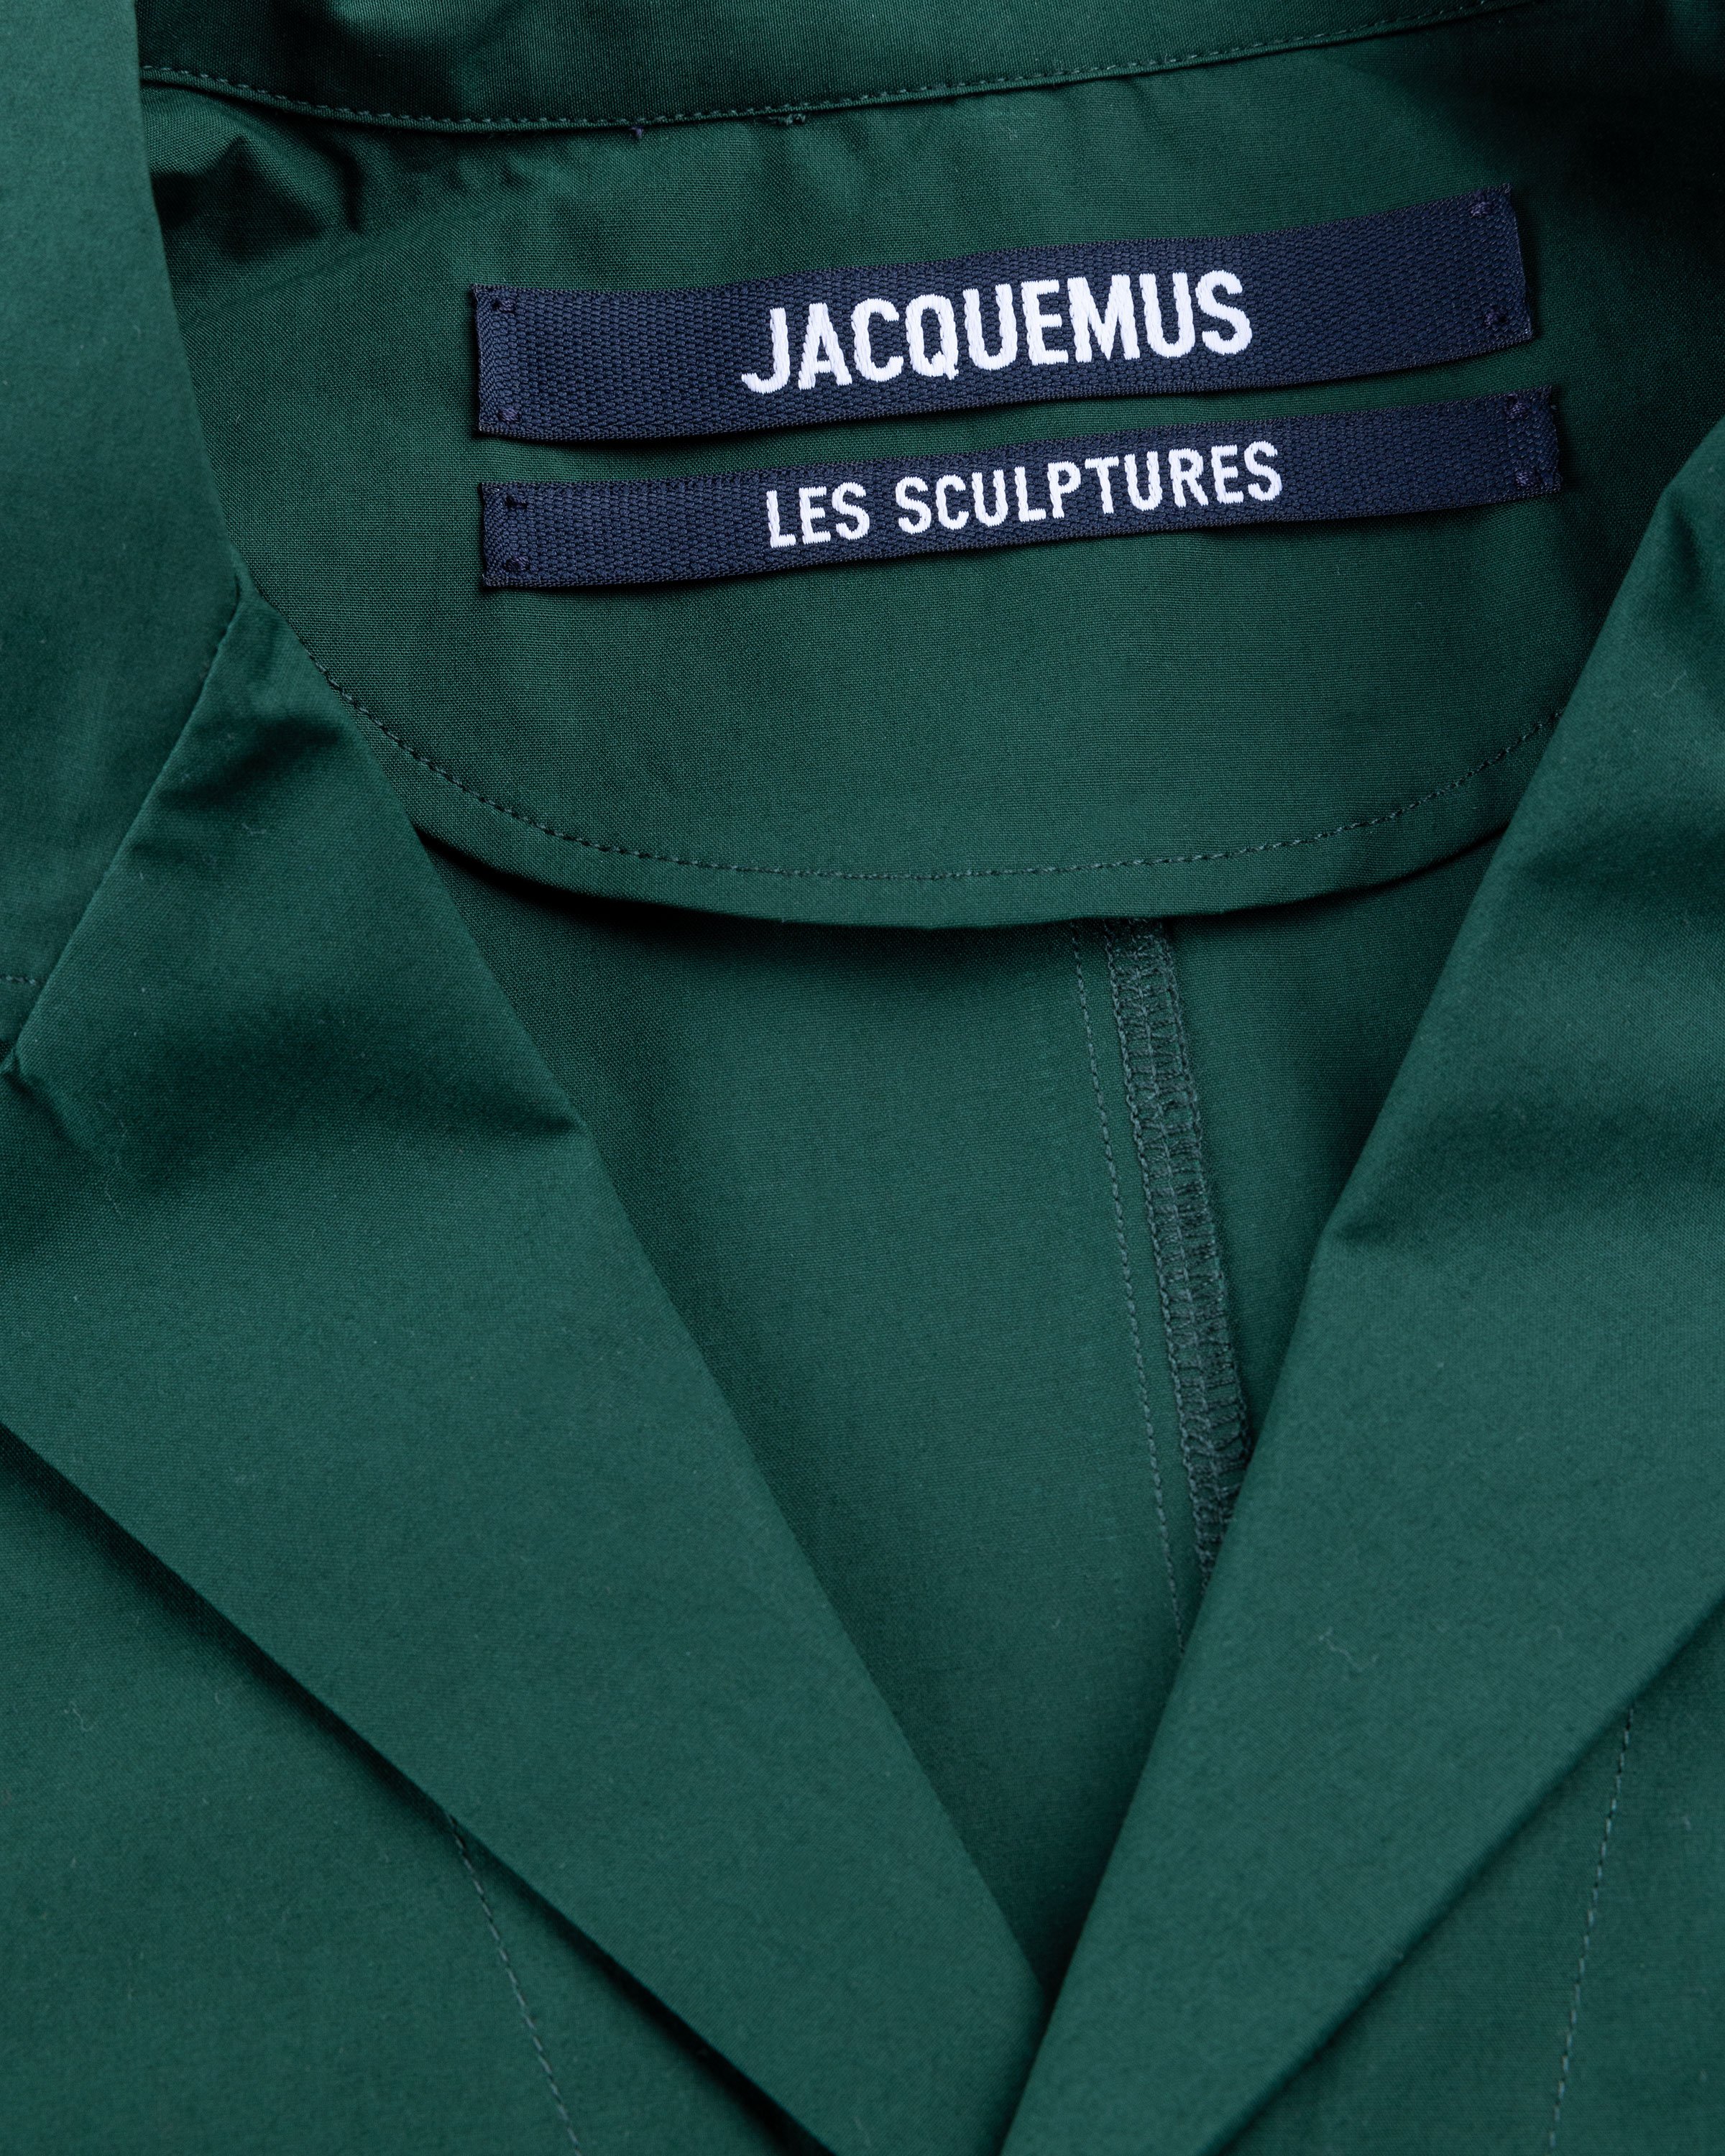 JACQUEMUS - LE HAUT POLO - Clothing - Green - Image 6